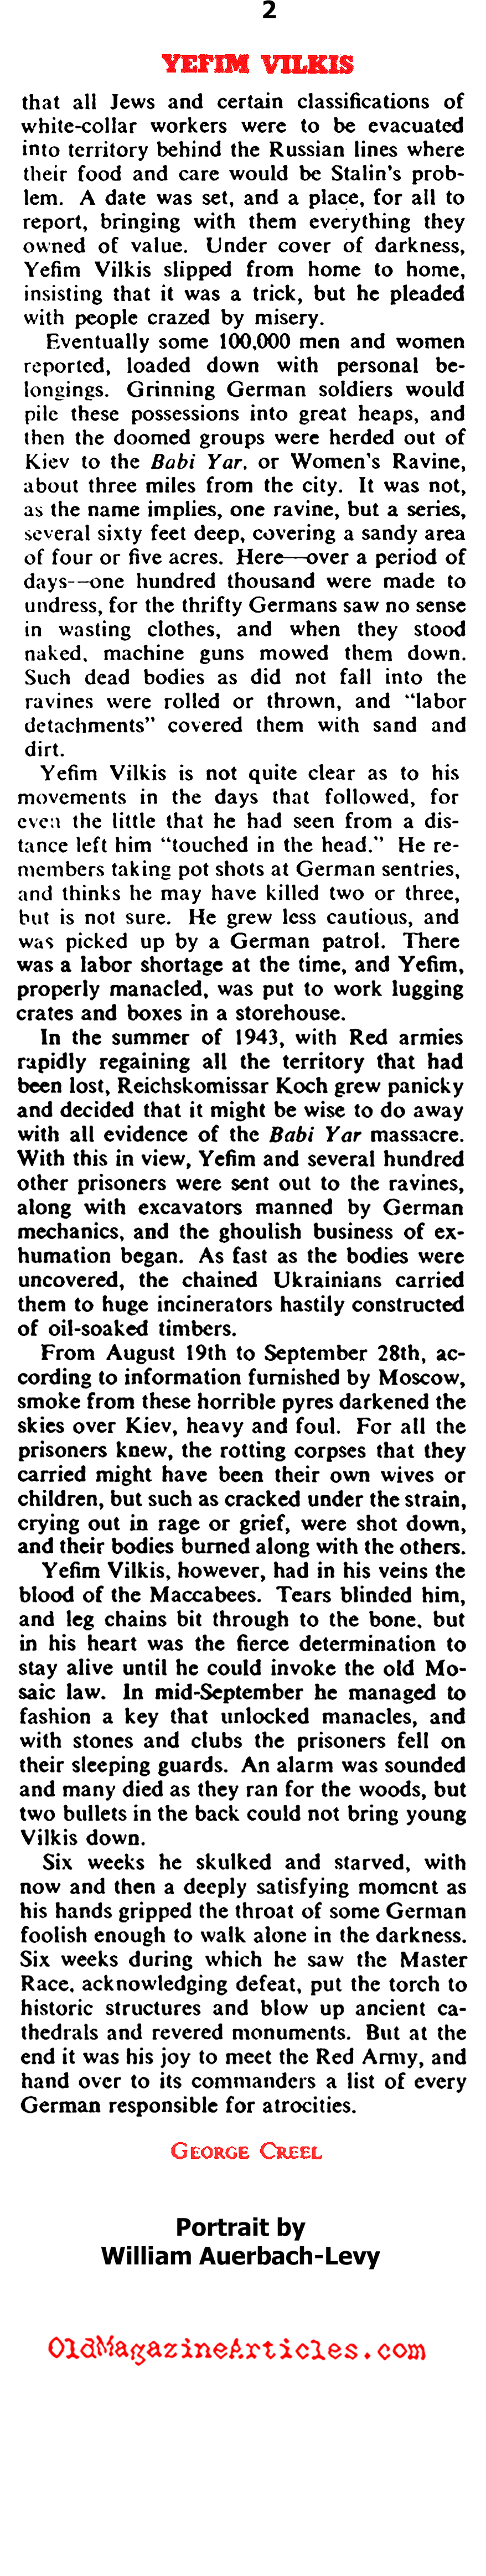 Ukrainian Partisan Witnessed to Nazi Murders at Babi Yar (Collier's Magazine, 1945)